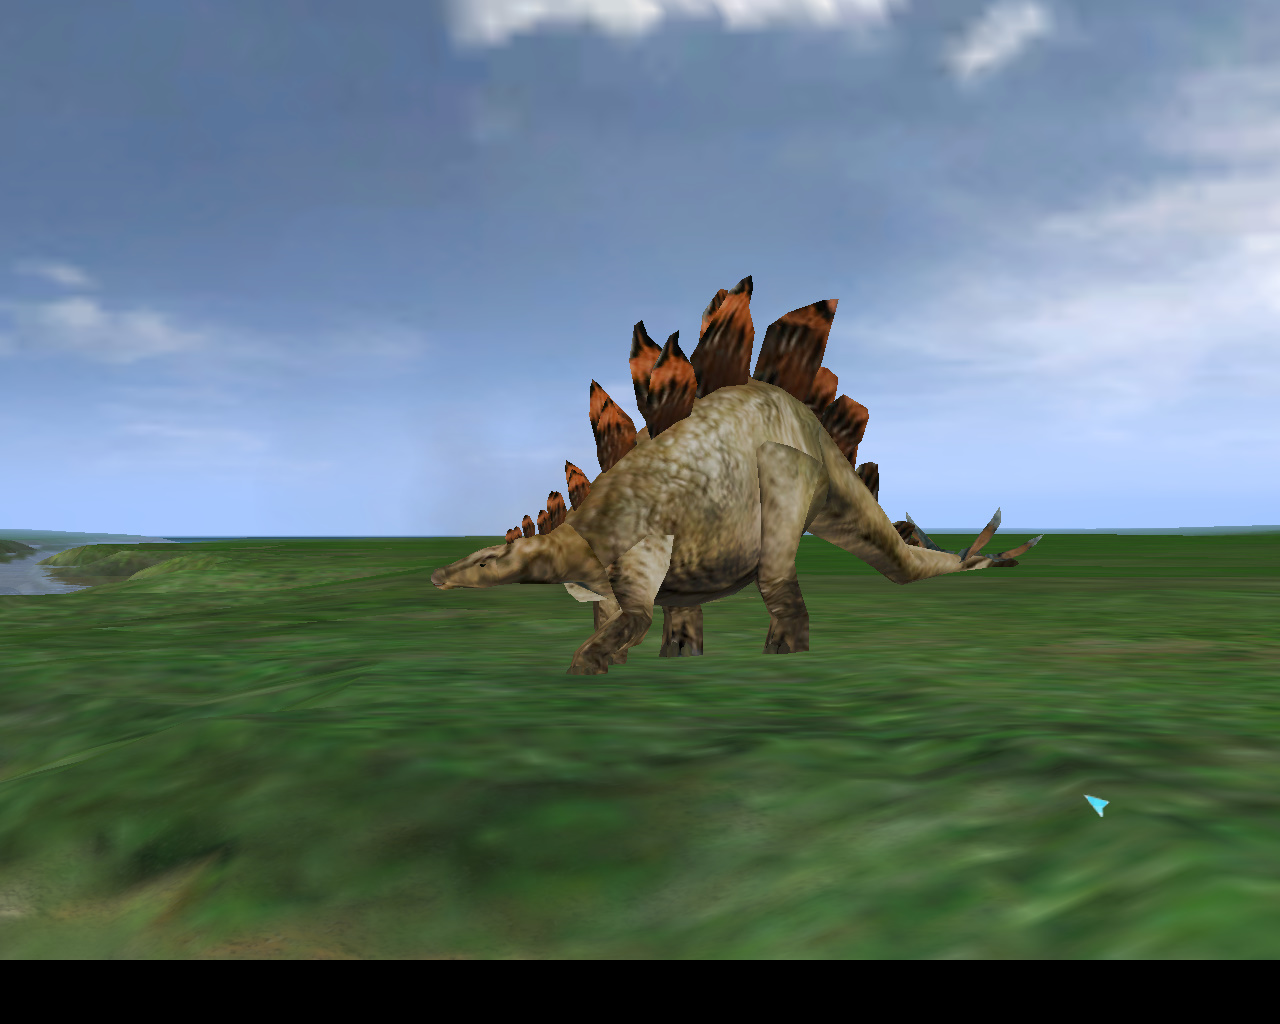 jurassic world the game stegosaurus